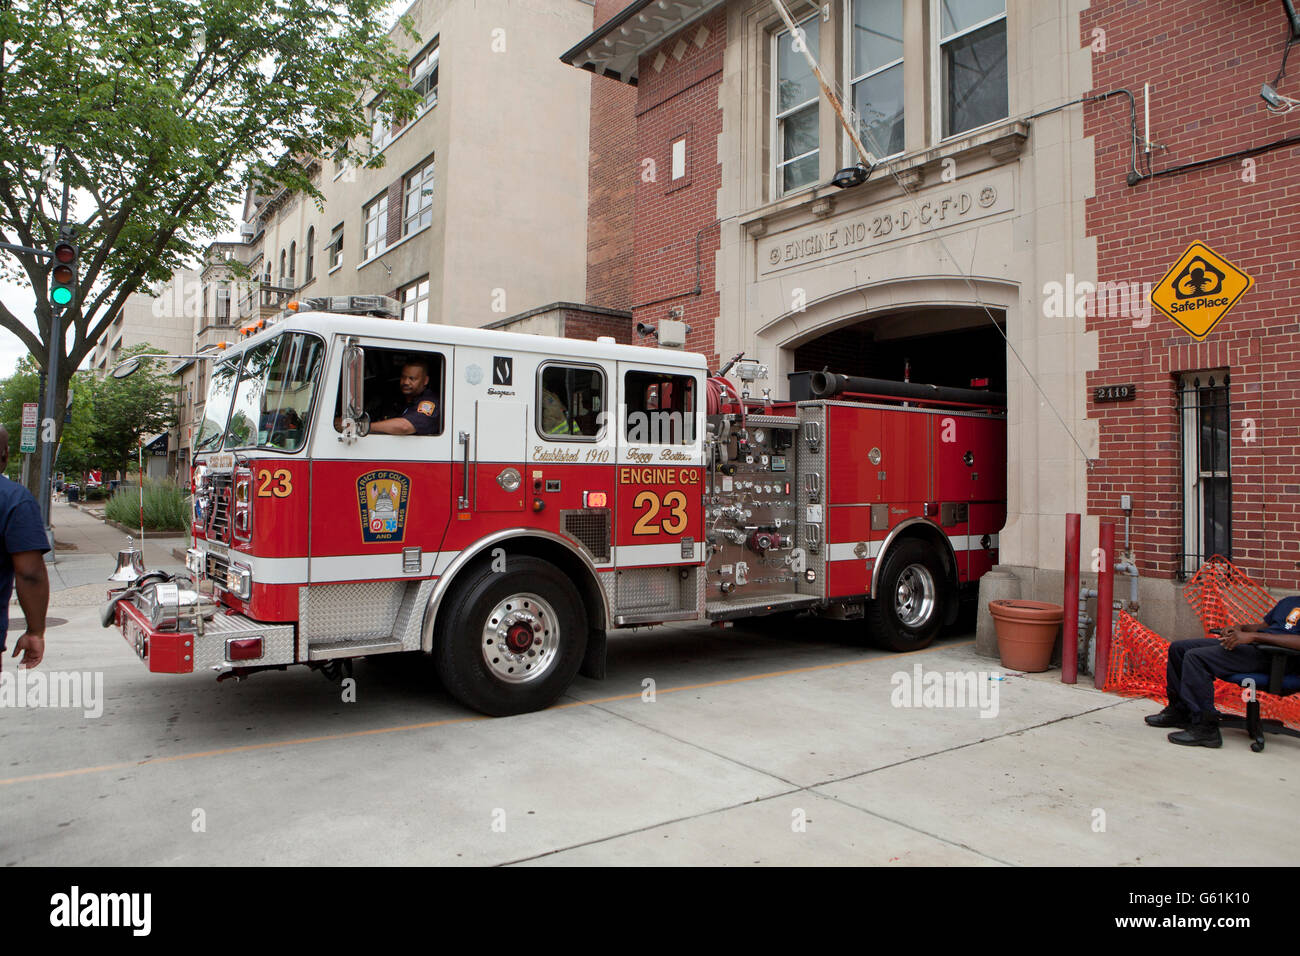 Fire truck backing into station - Washington, DC USA Stock Photo